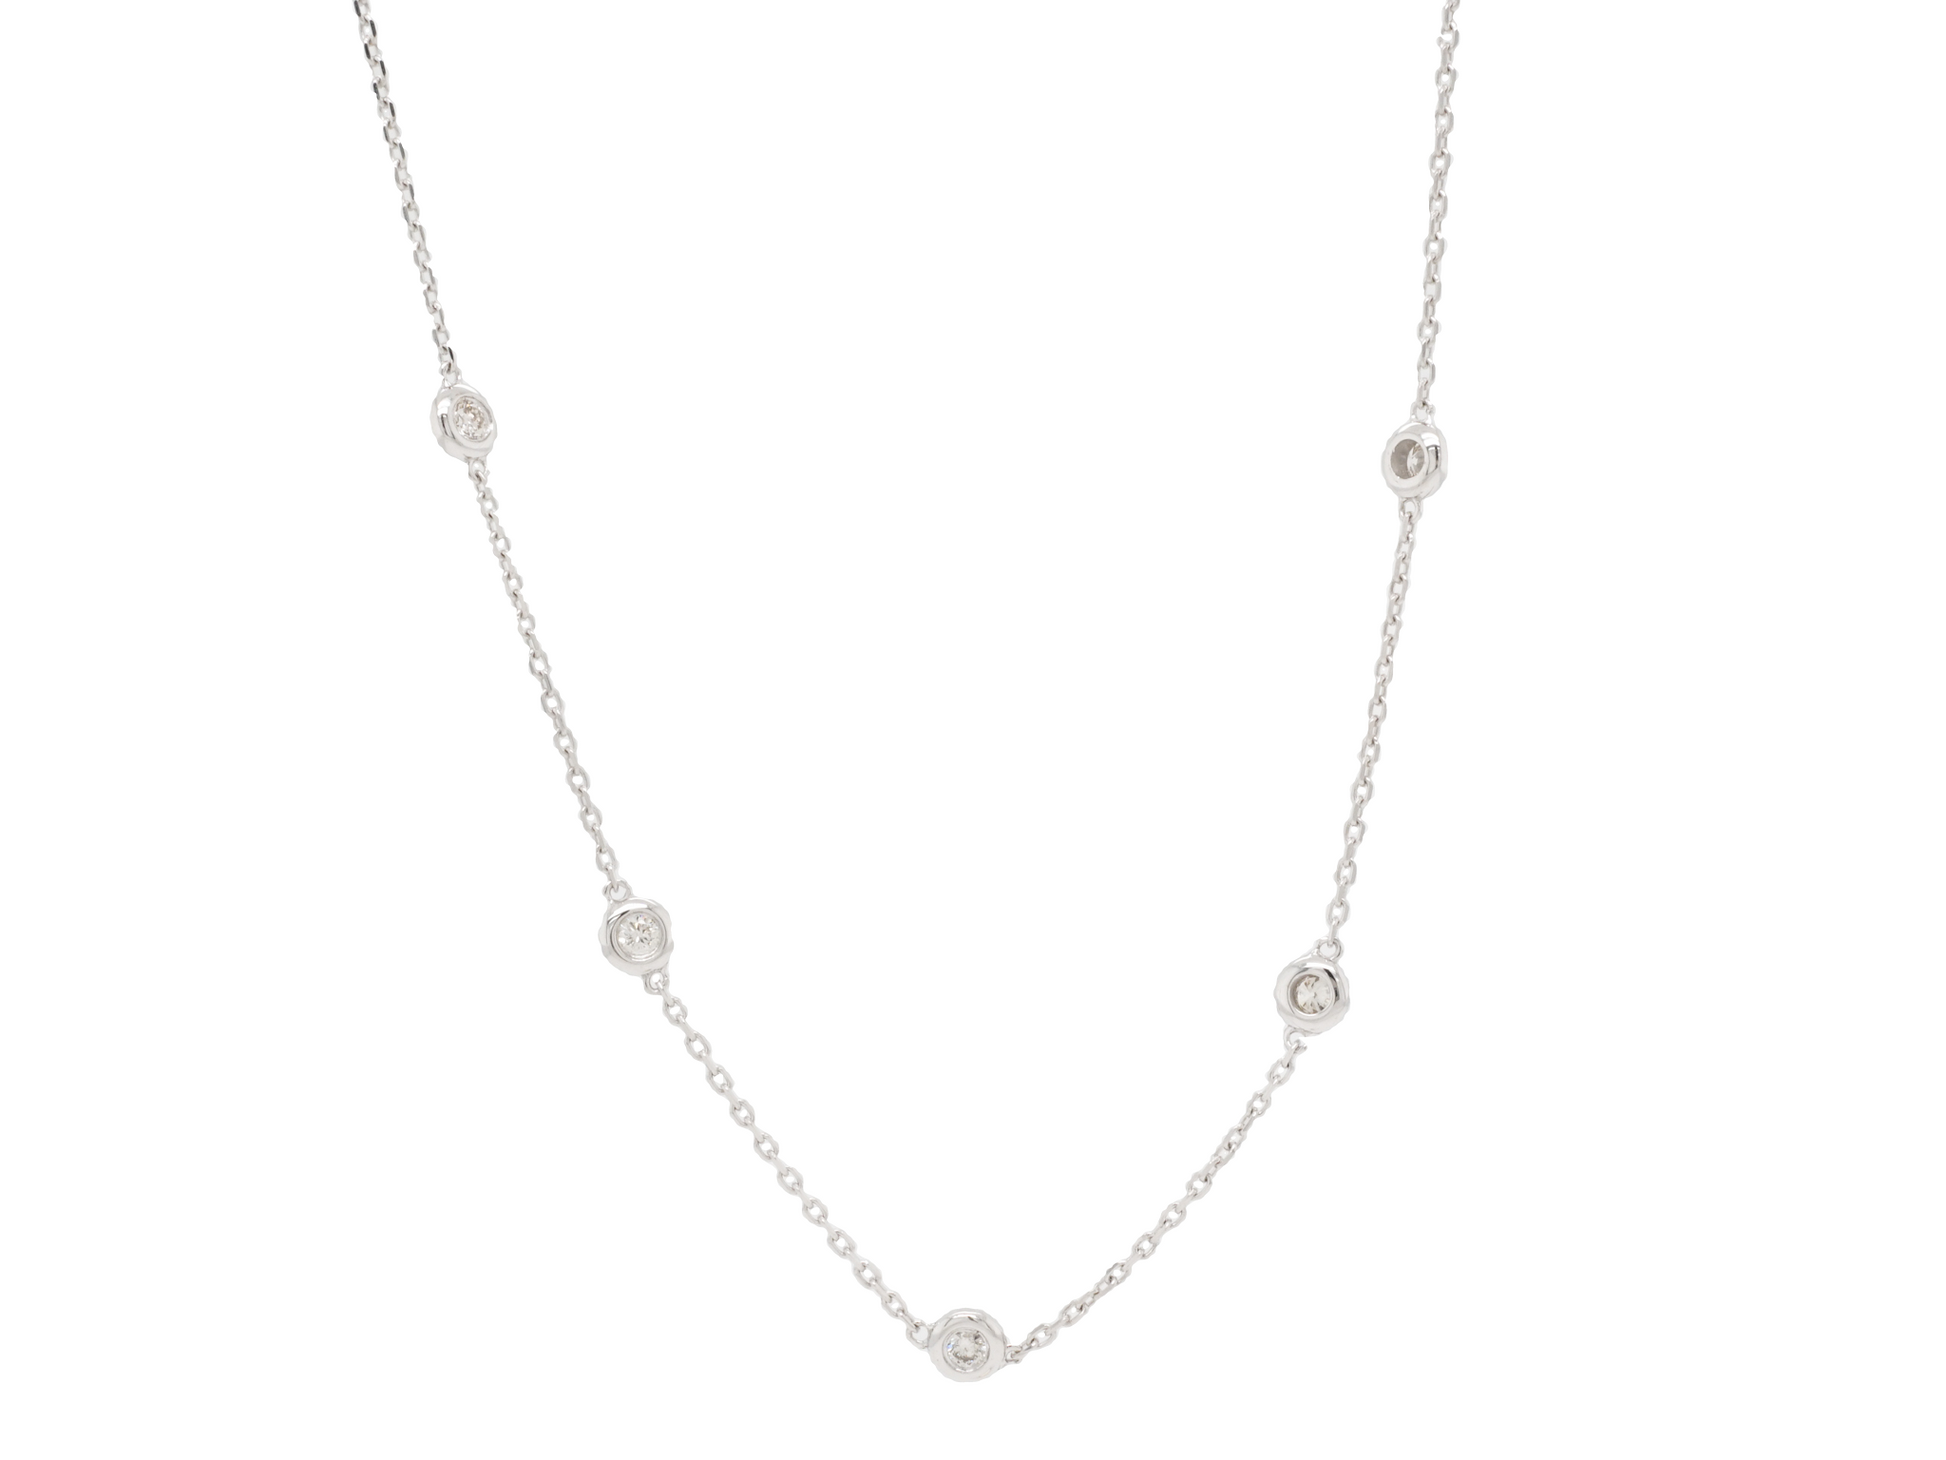 .16 Carat Bezel Set Diamond Necklace in 14K White Gold